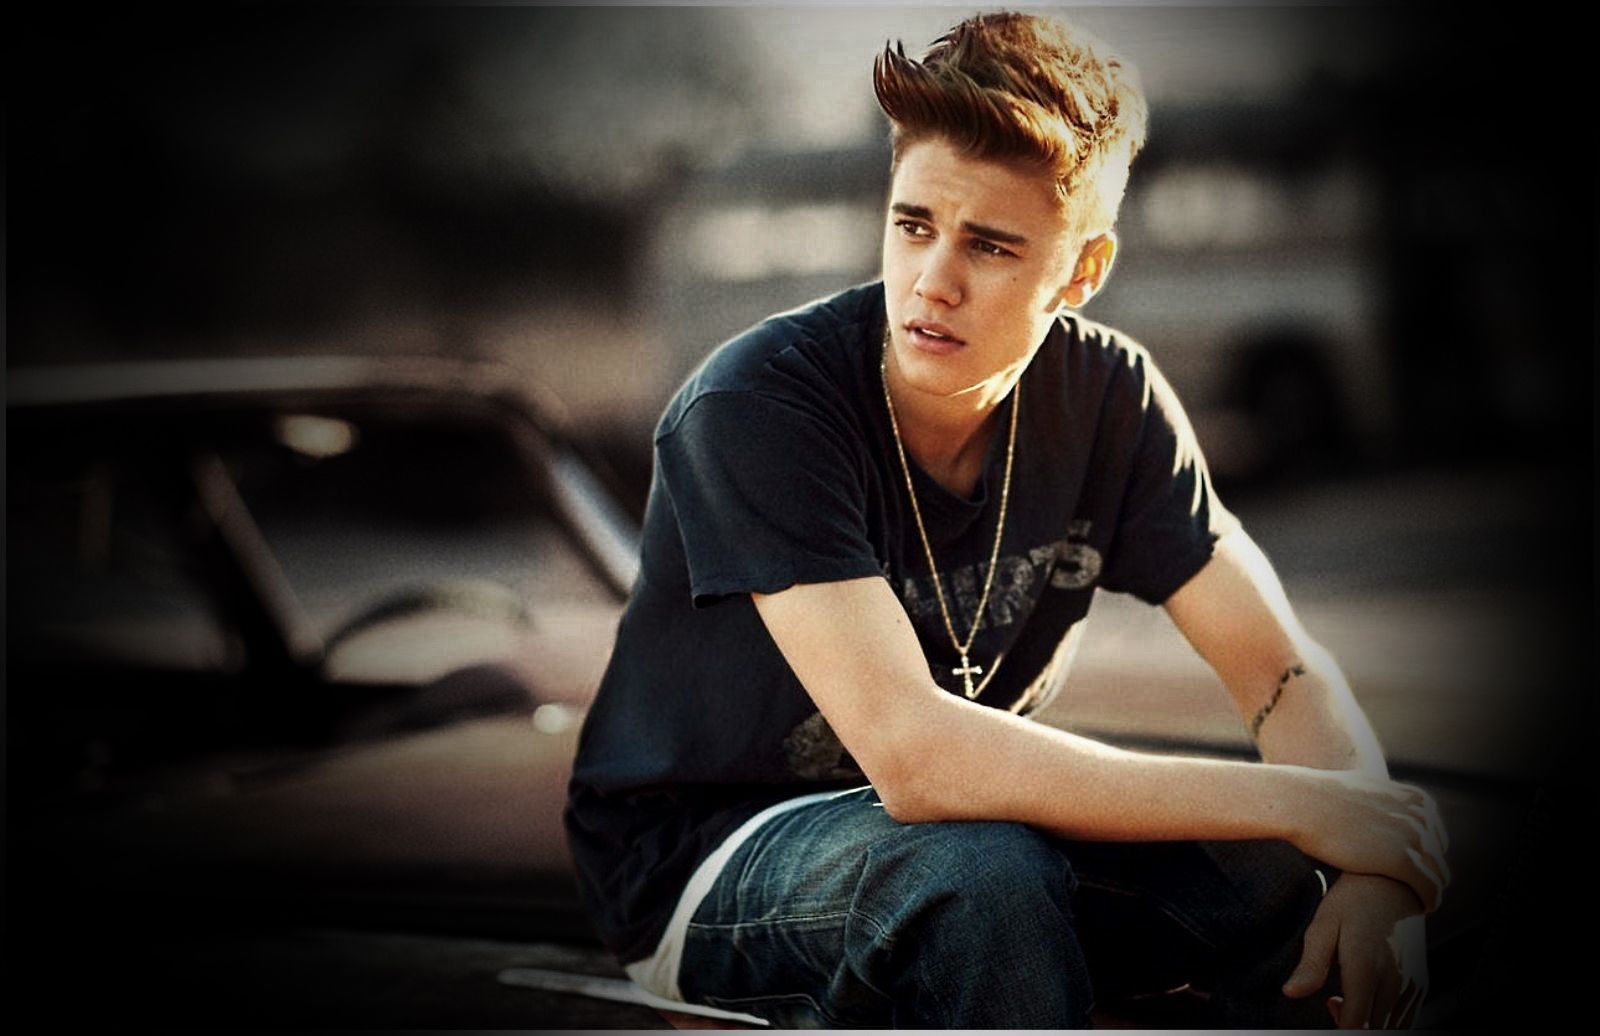 Justin Bieber Wallpaper Free Download HD Backgrounds